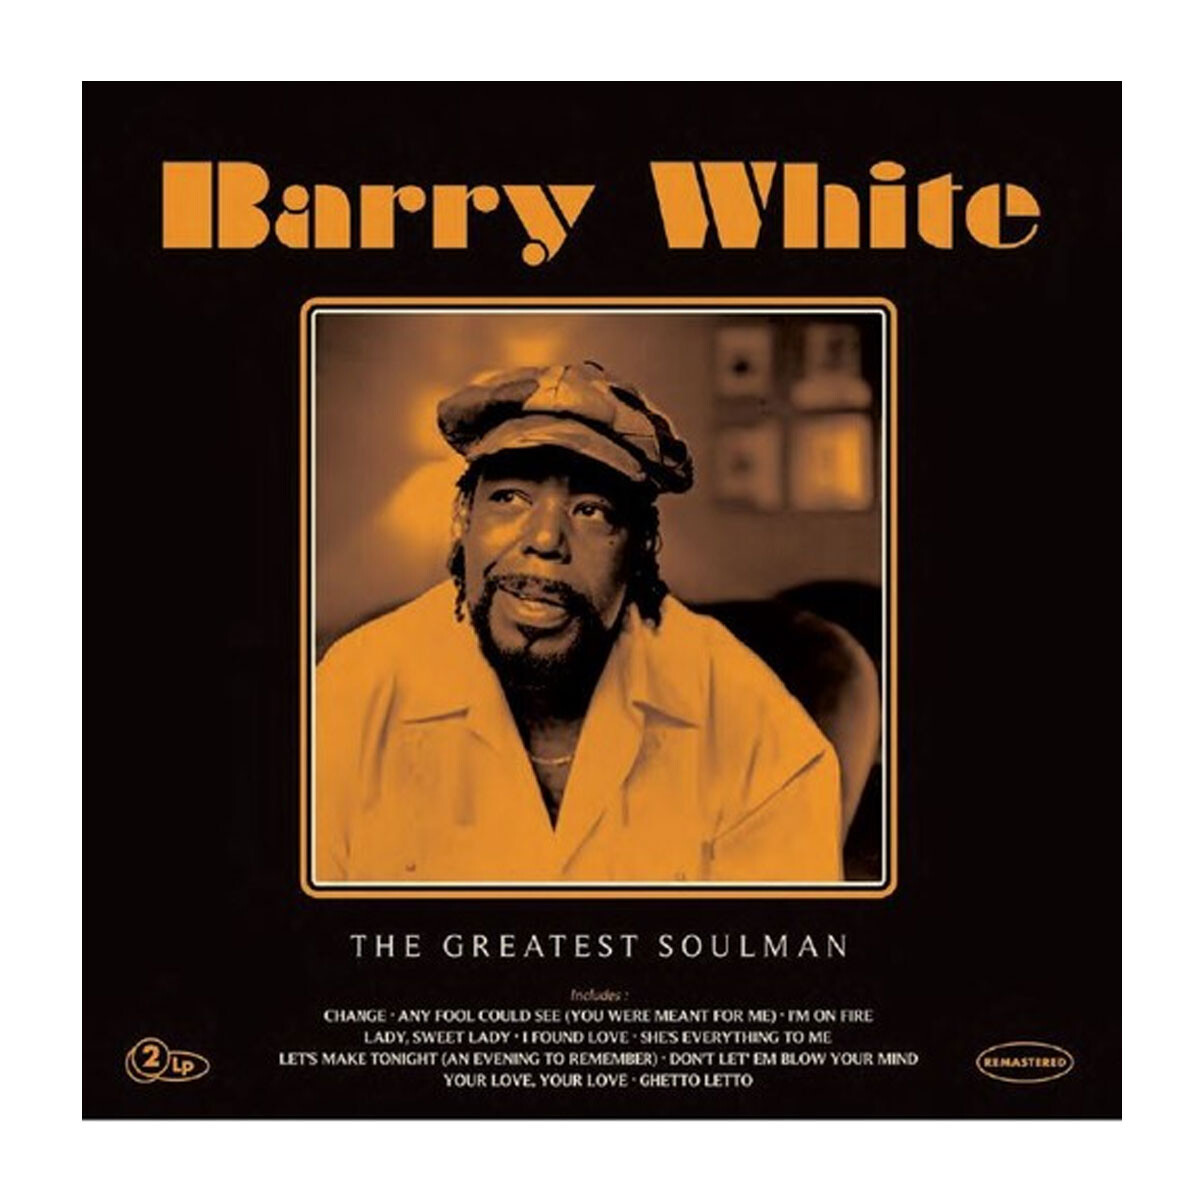 White,barry / Greatest Soulman - Lp 